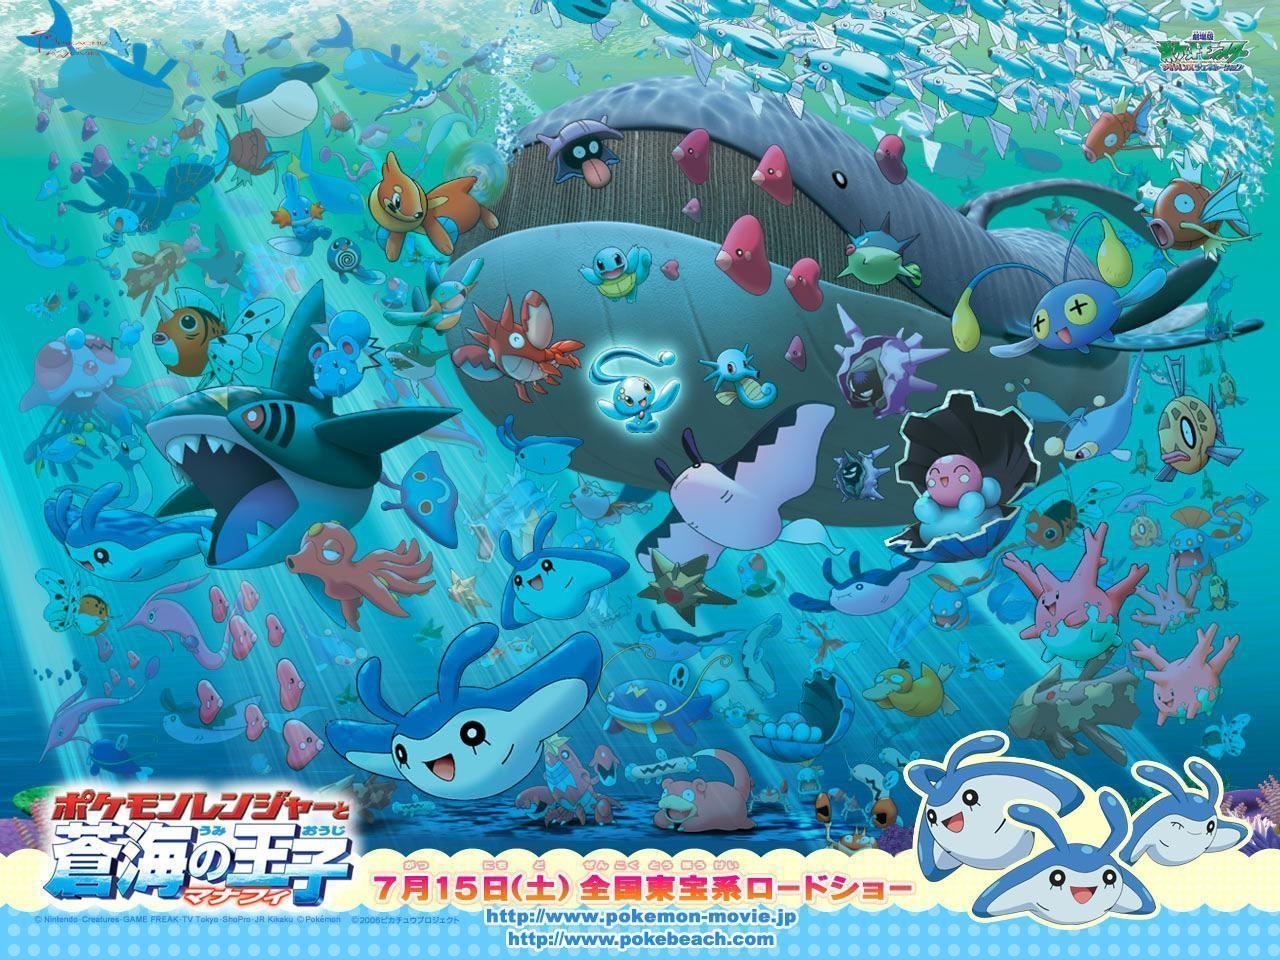 Mantine (Pokémon) HD Wallpaper and Background Image